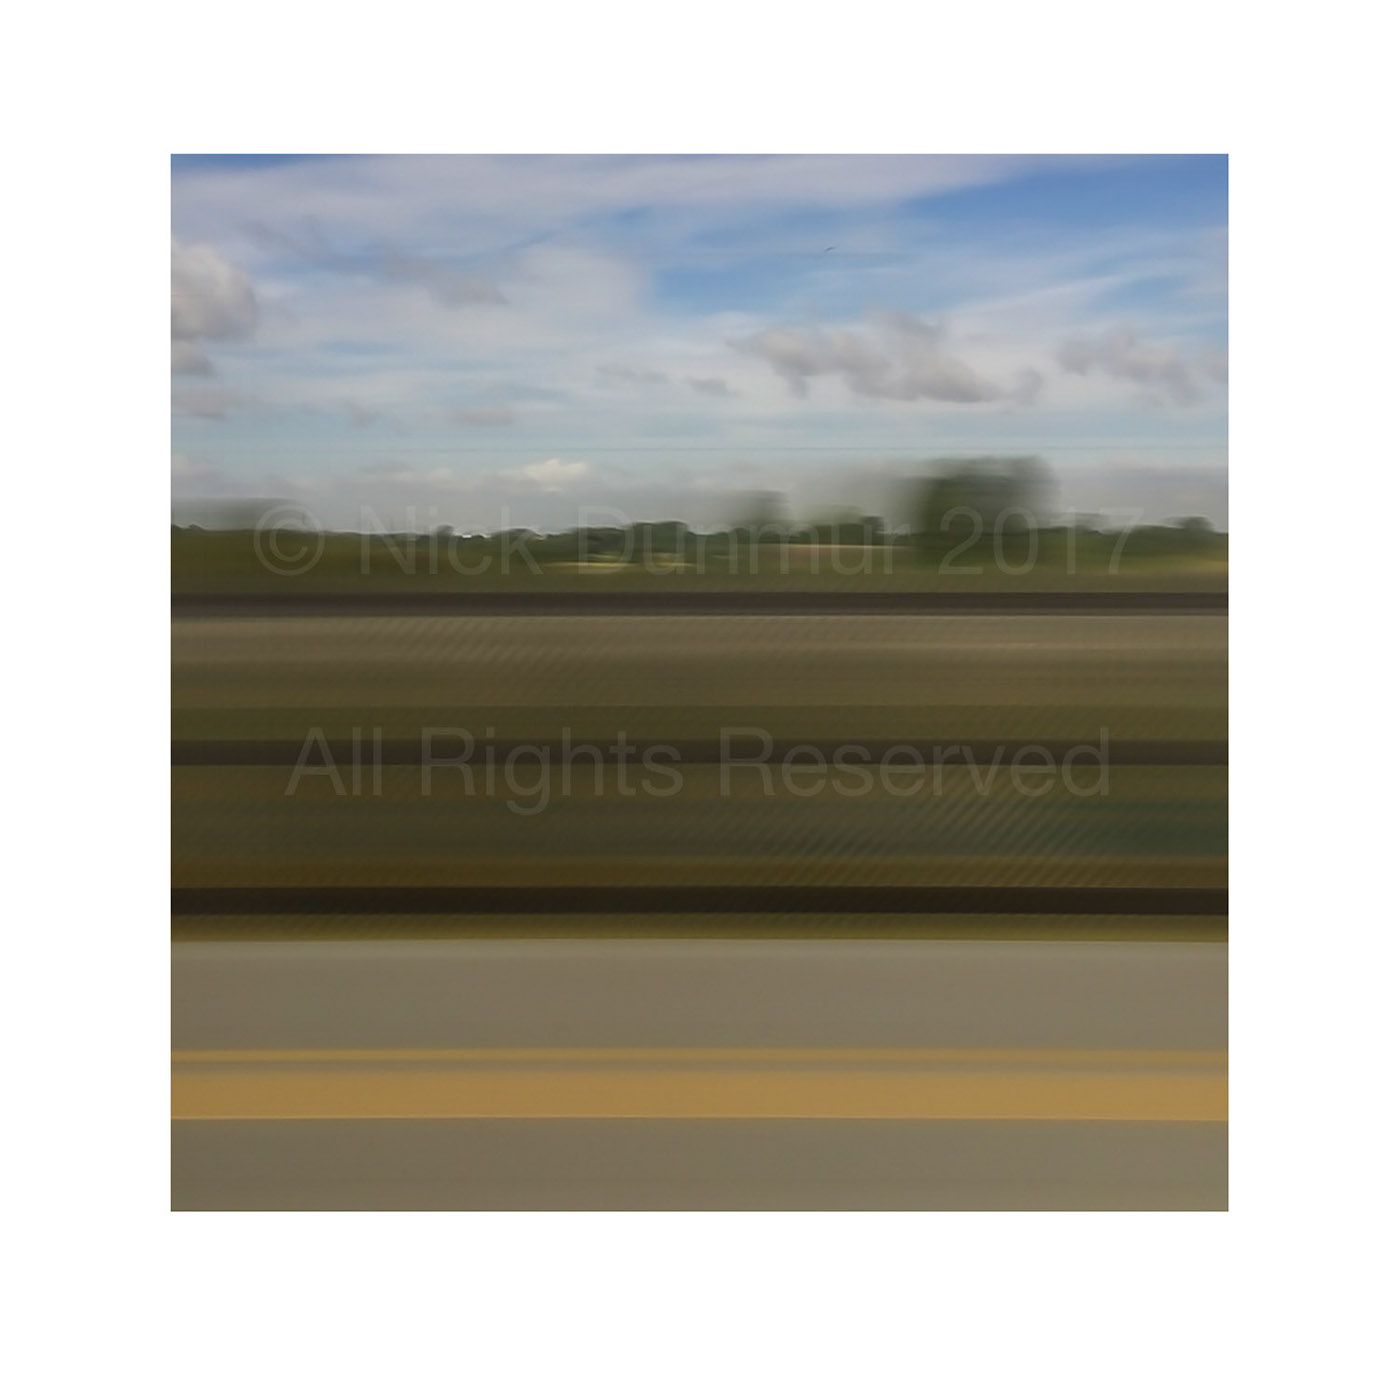 train railway journey Travel view blur slow shutter